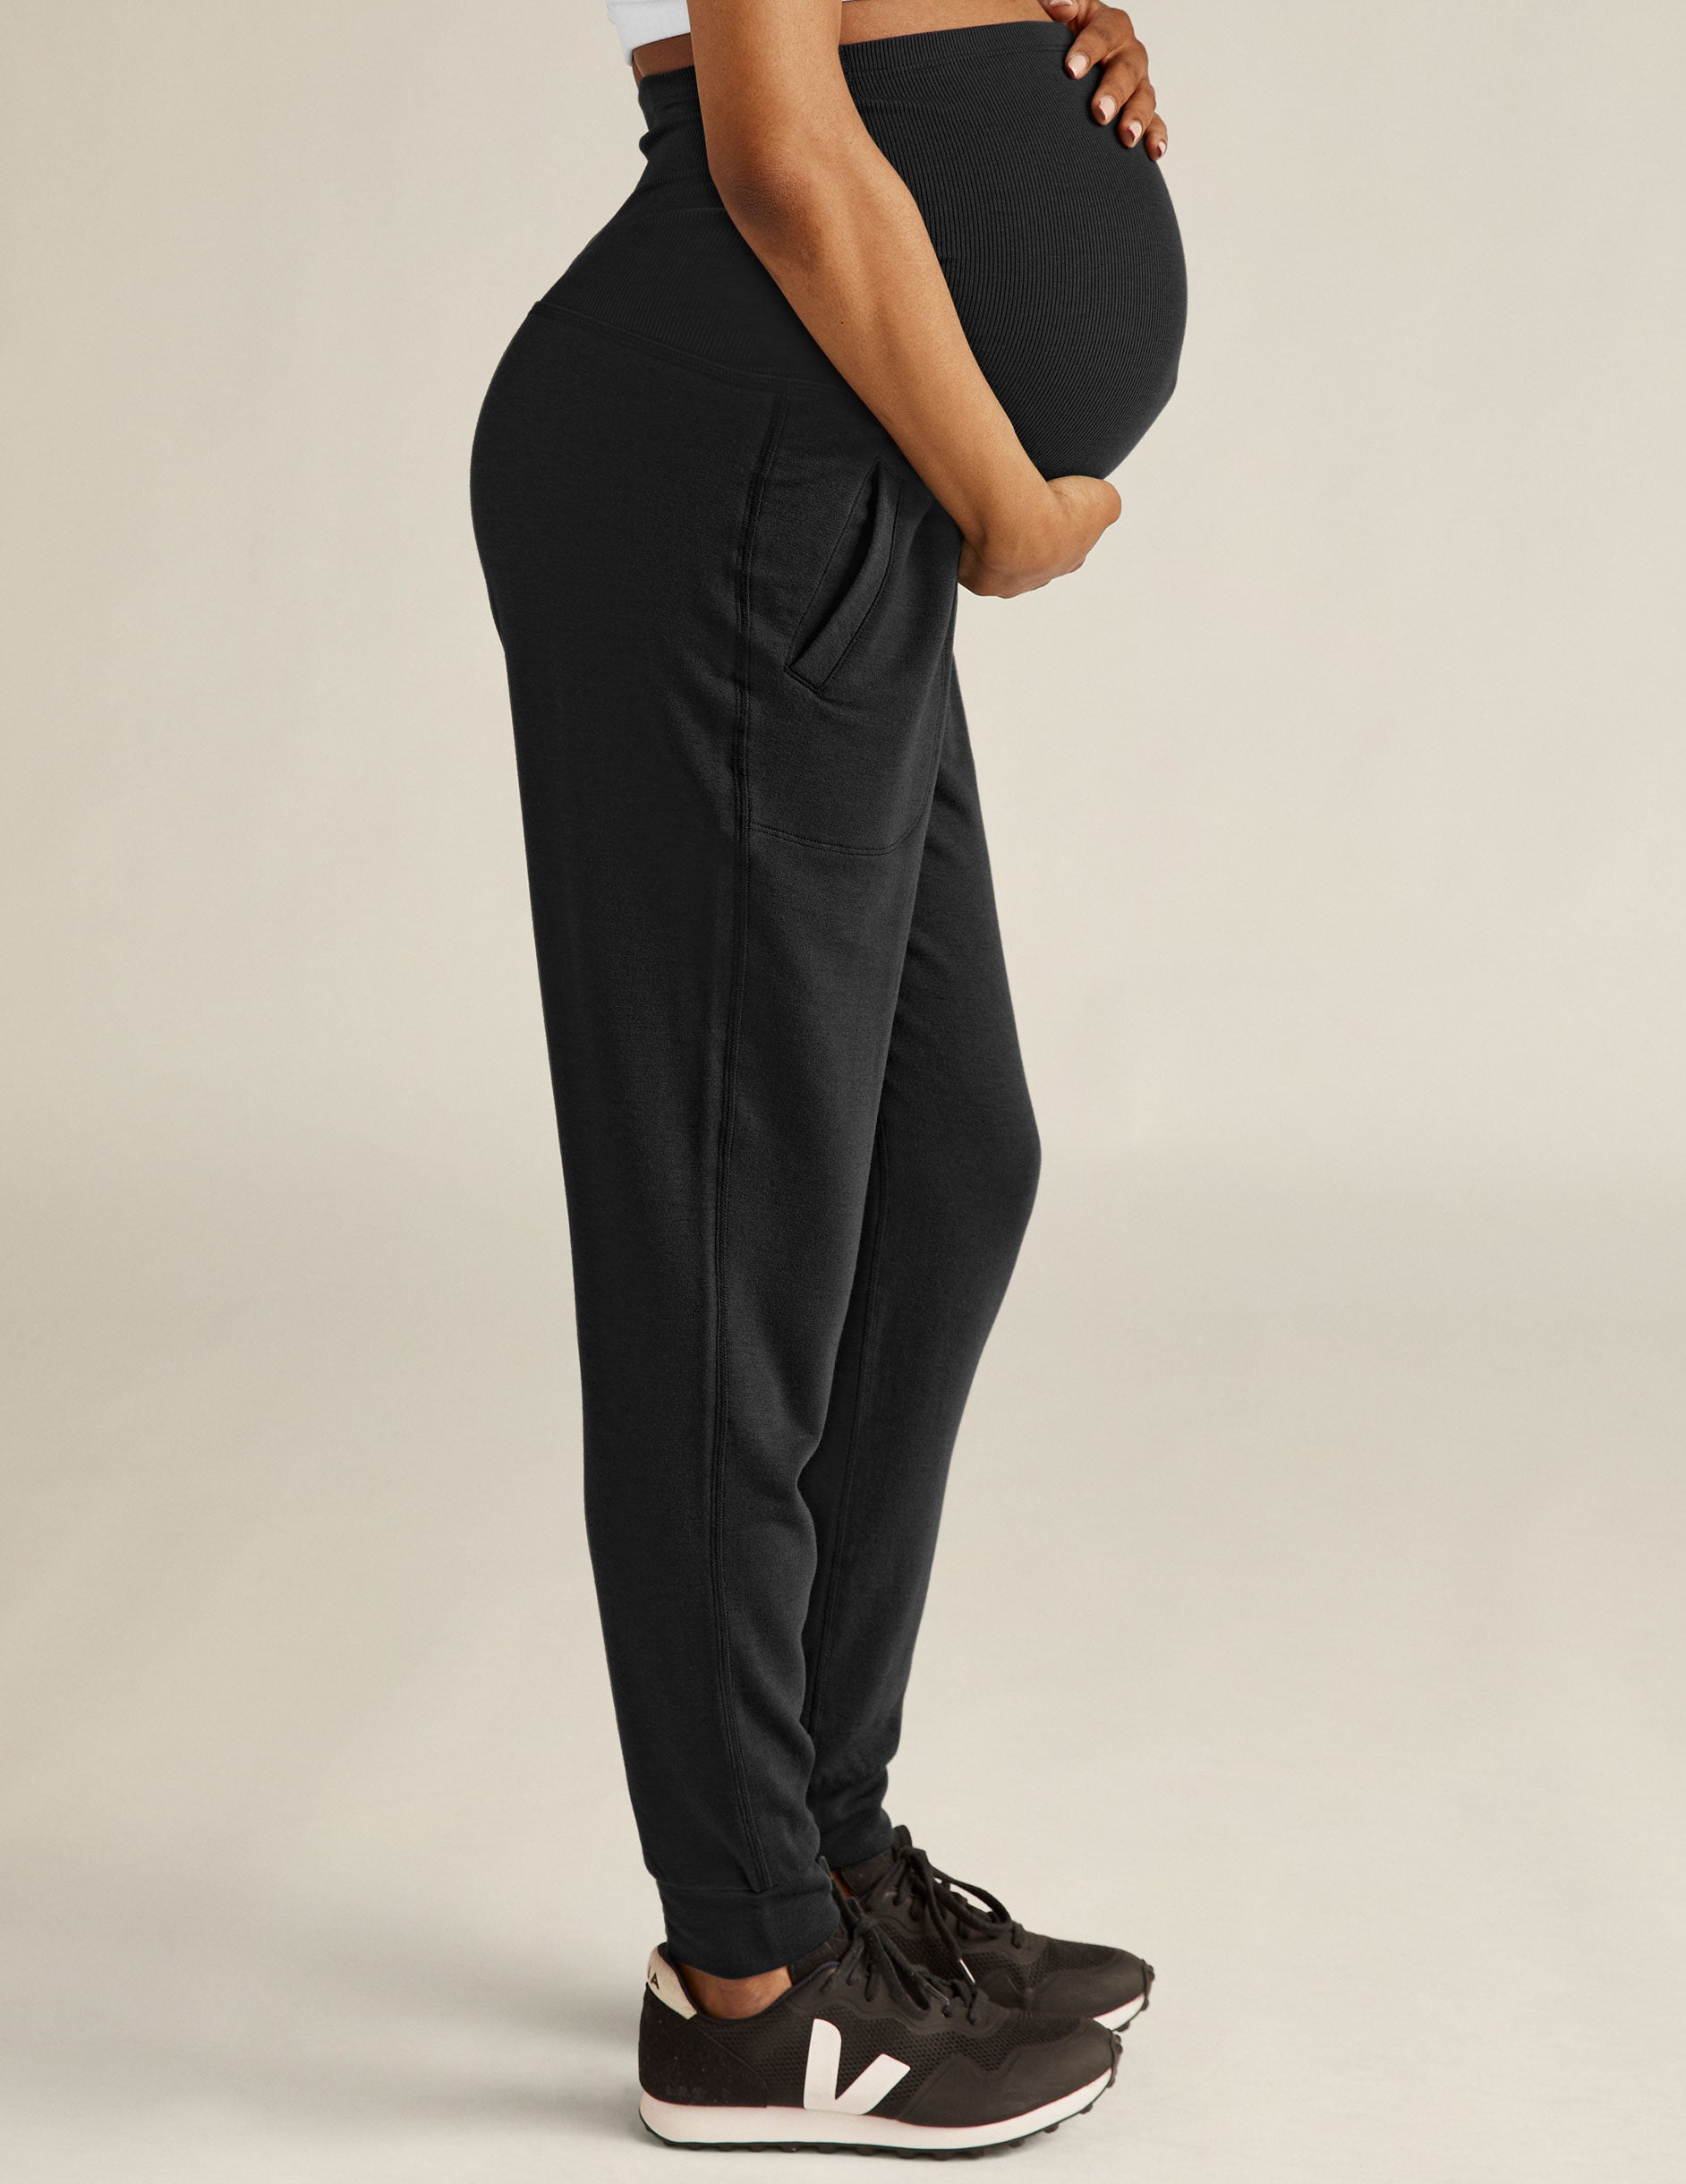 Gentle Yoga Pregnancy Bottoms - Black KIMJALY